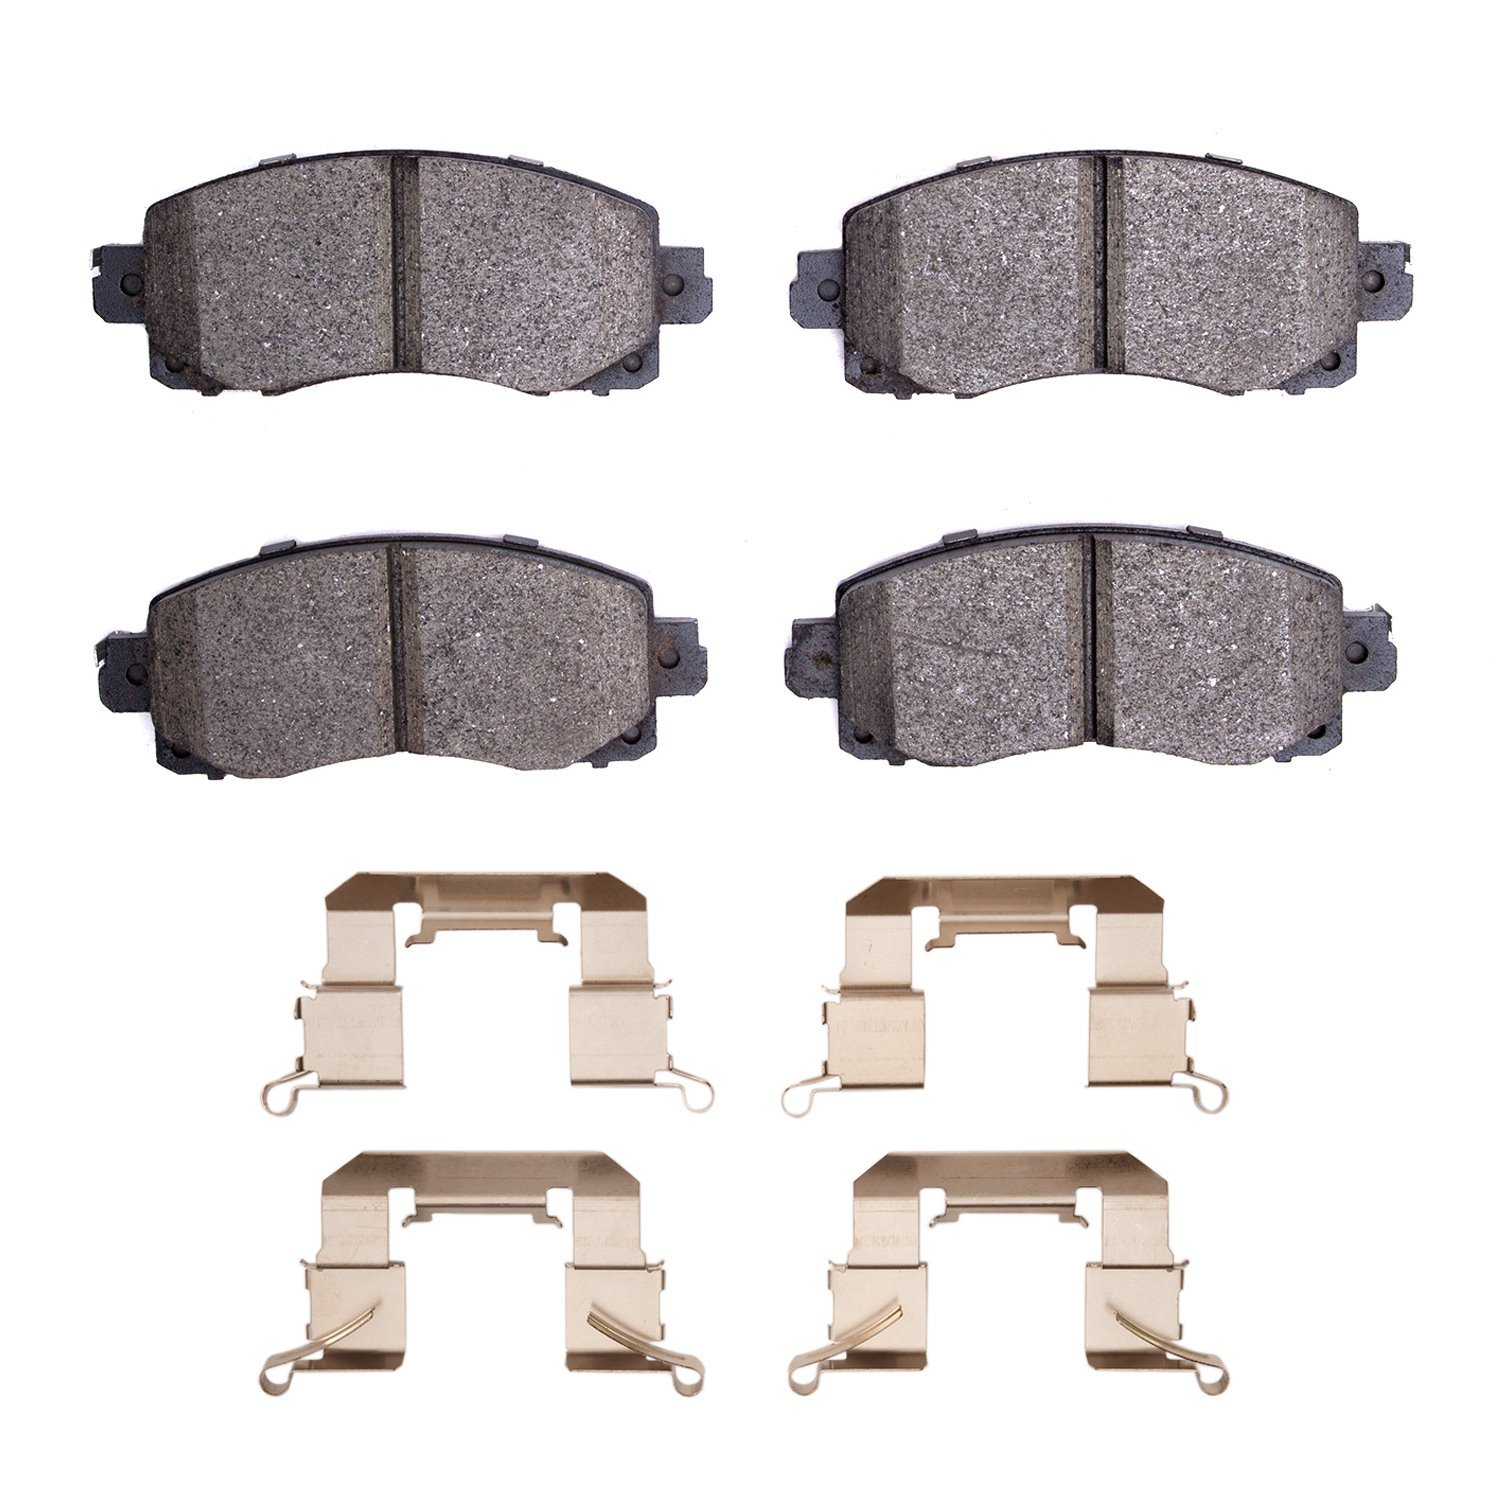 1310-2045-02 3000-Series Ceramic Brake Pads & Hardware Kit, Fits Select Subaru, Position: Front